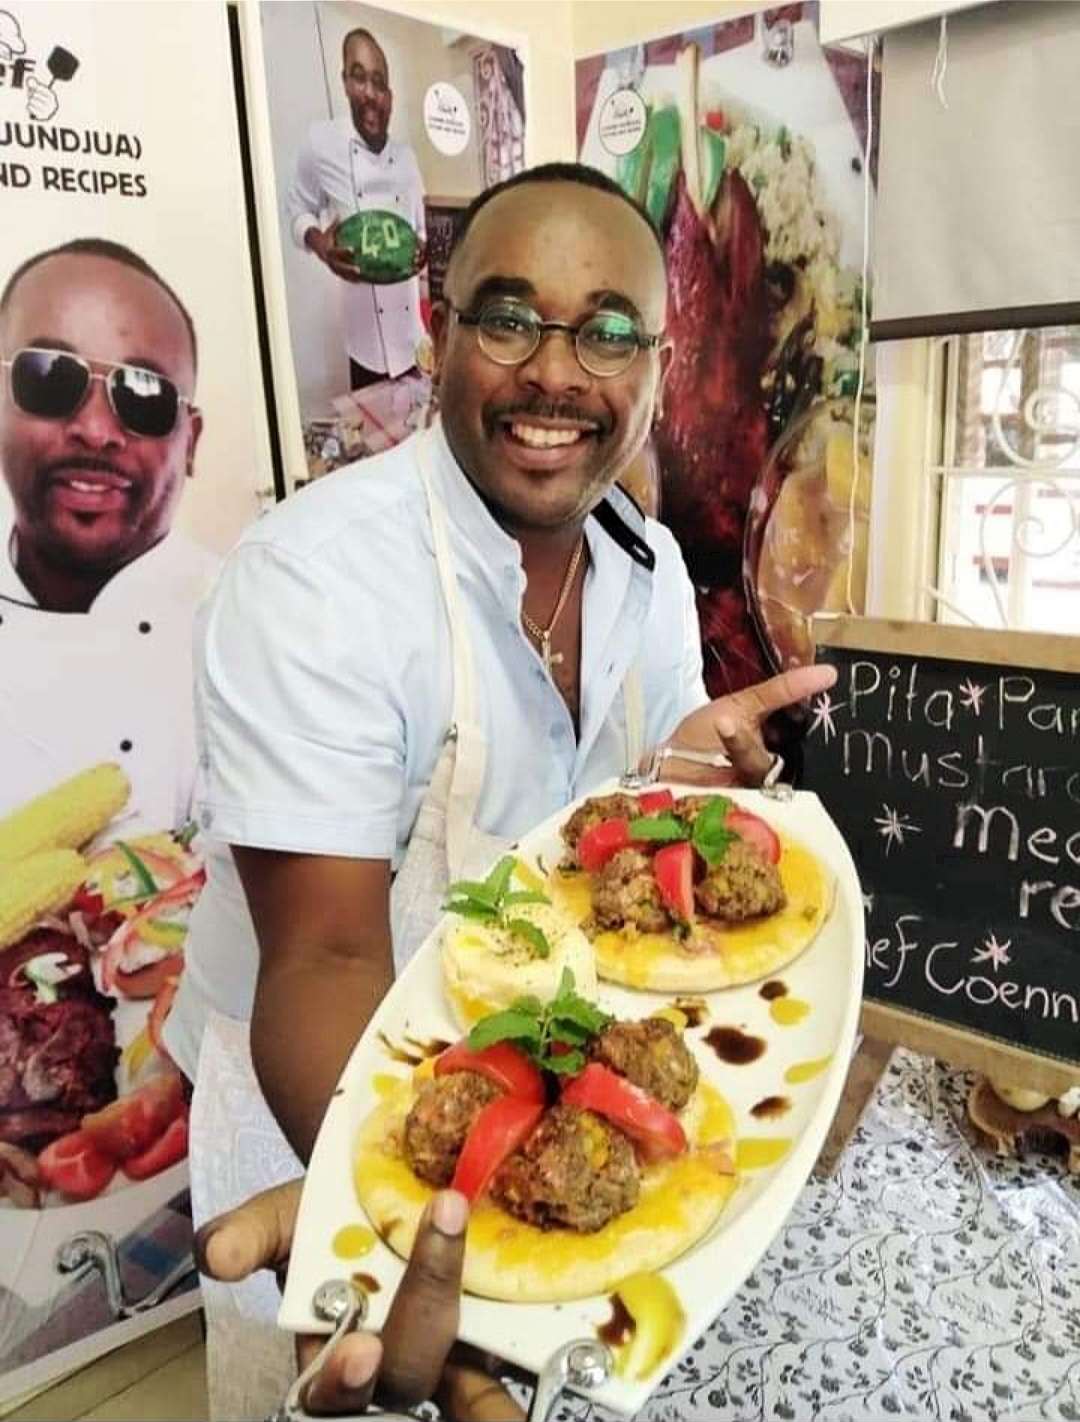 Chef Coennie Muundjua Kitchen recipes